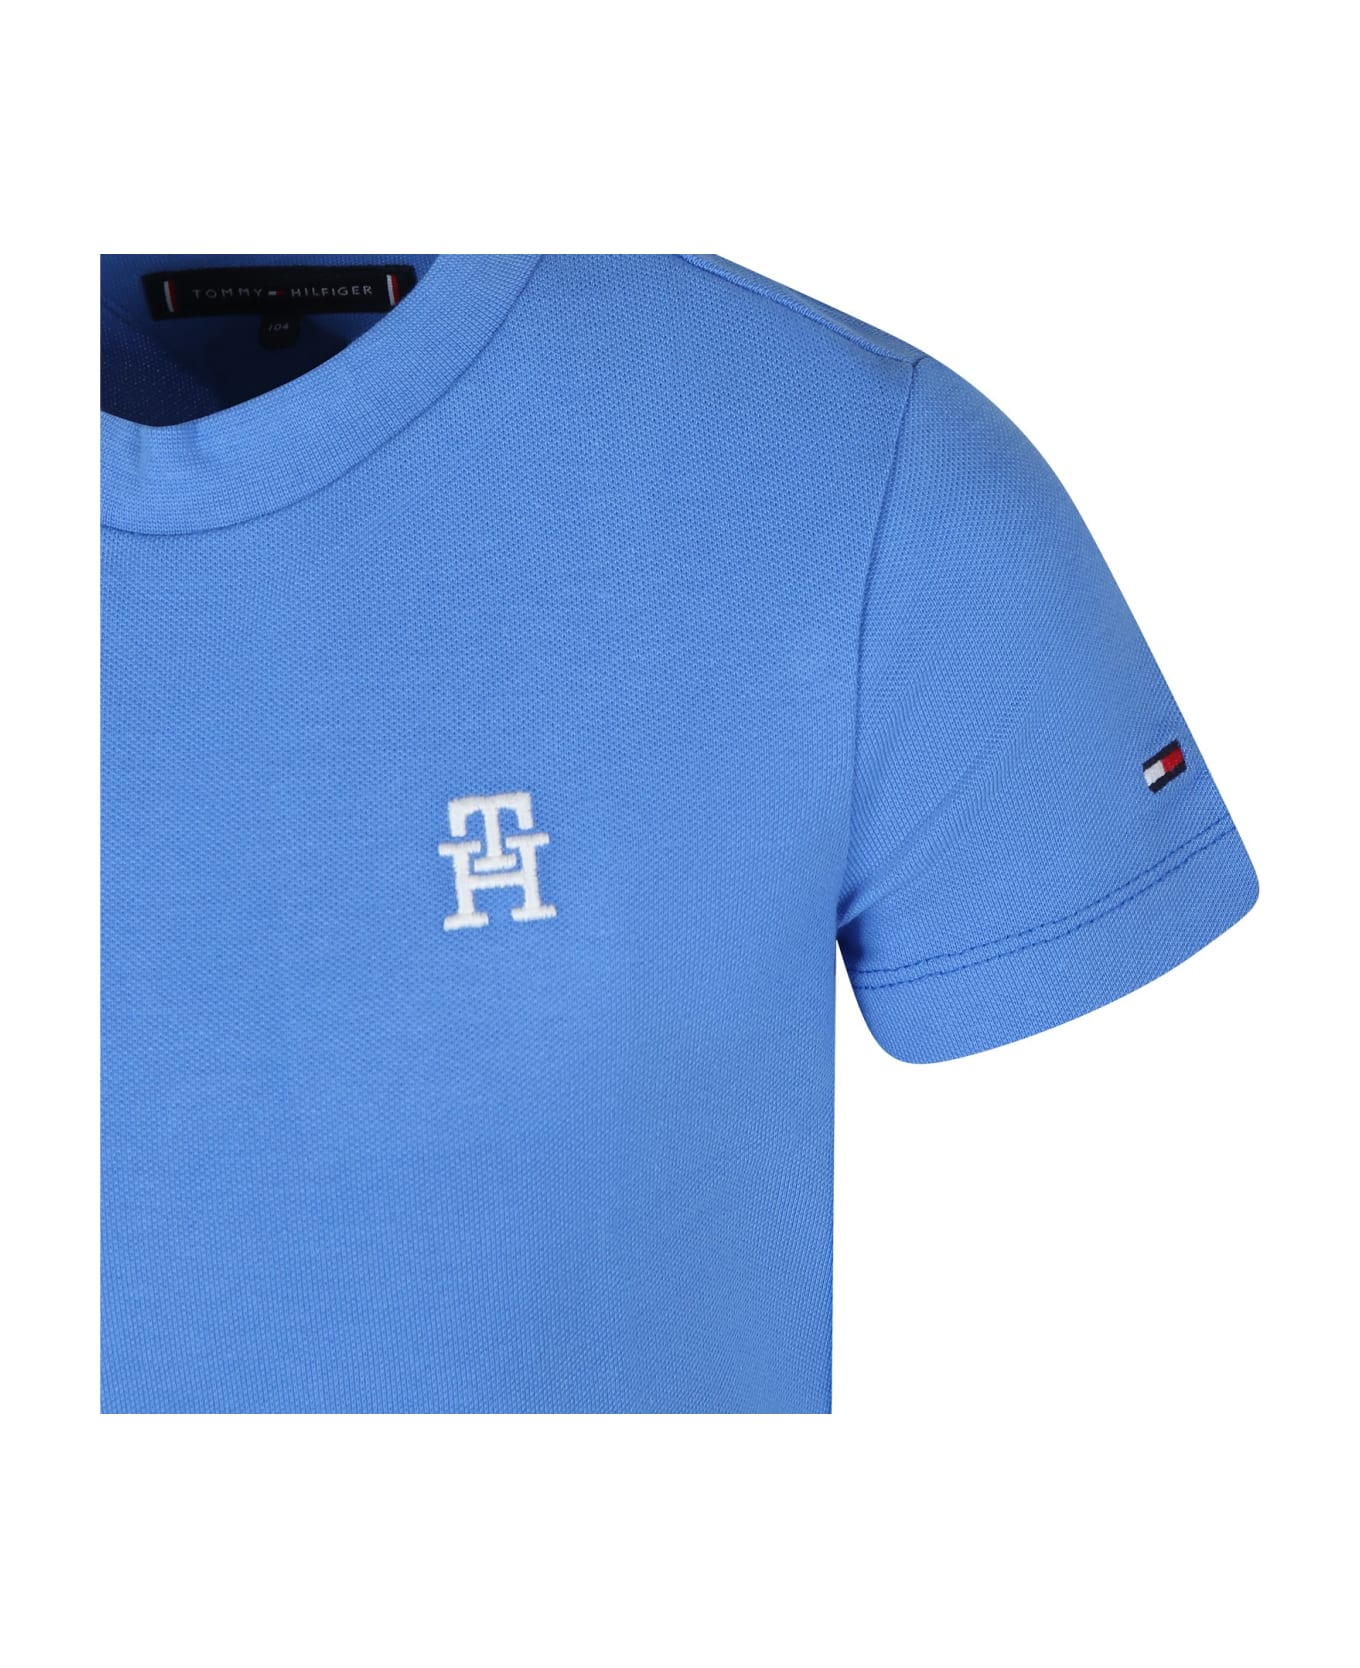 Tommy Hilfiger Light Blue T-shirt For Boy With Logo - Light Blue